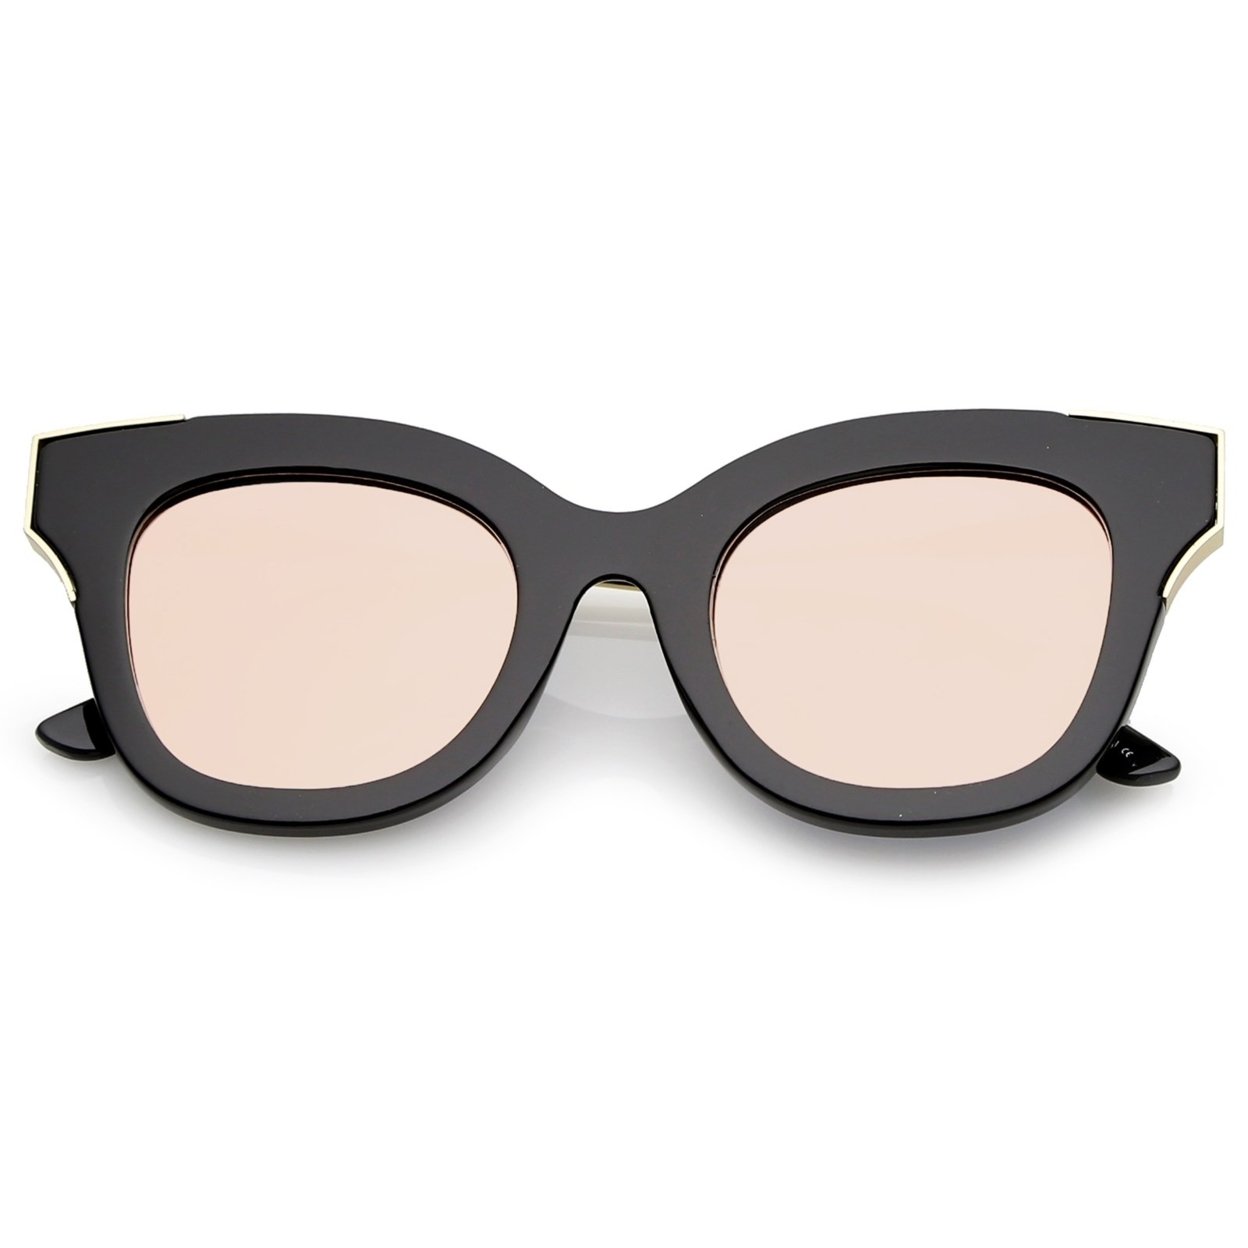 Oversize Slim Temple Metal Square Mirrored Flat Lens Cat Eye Sunglasses 48mm - Black-Silver / Silver Mirror